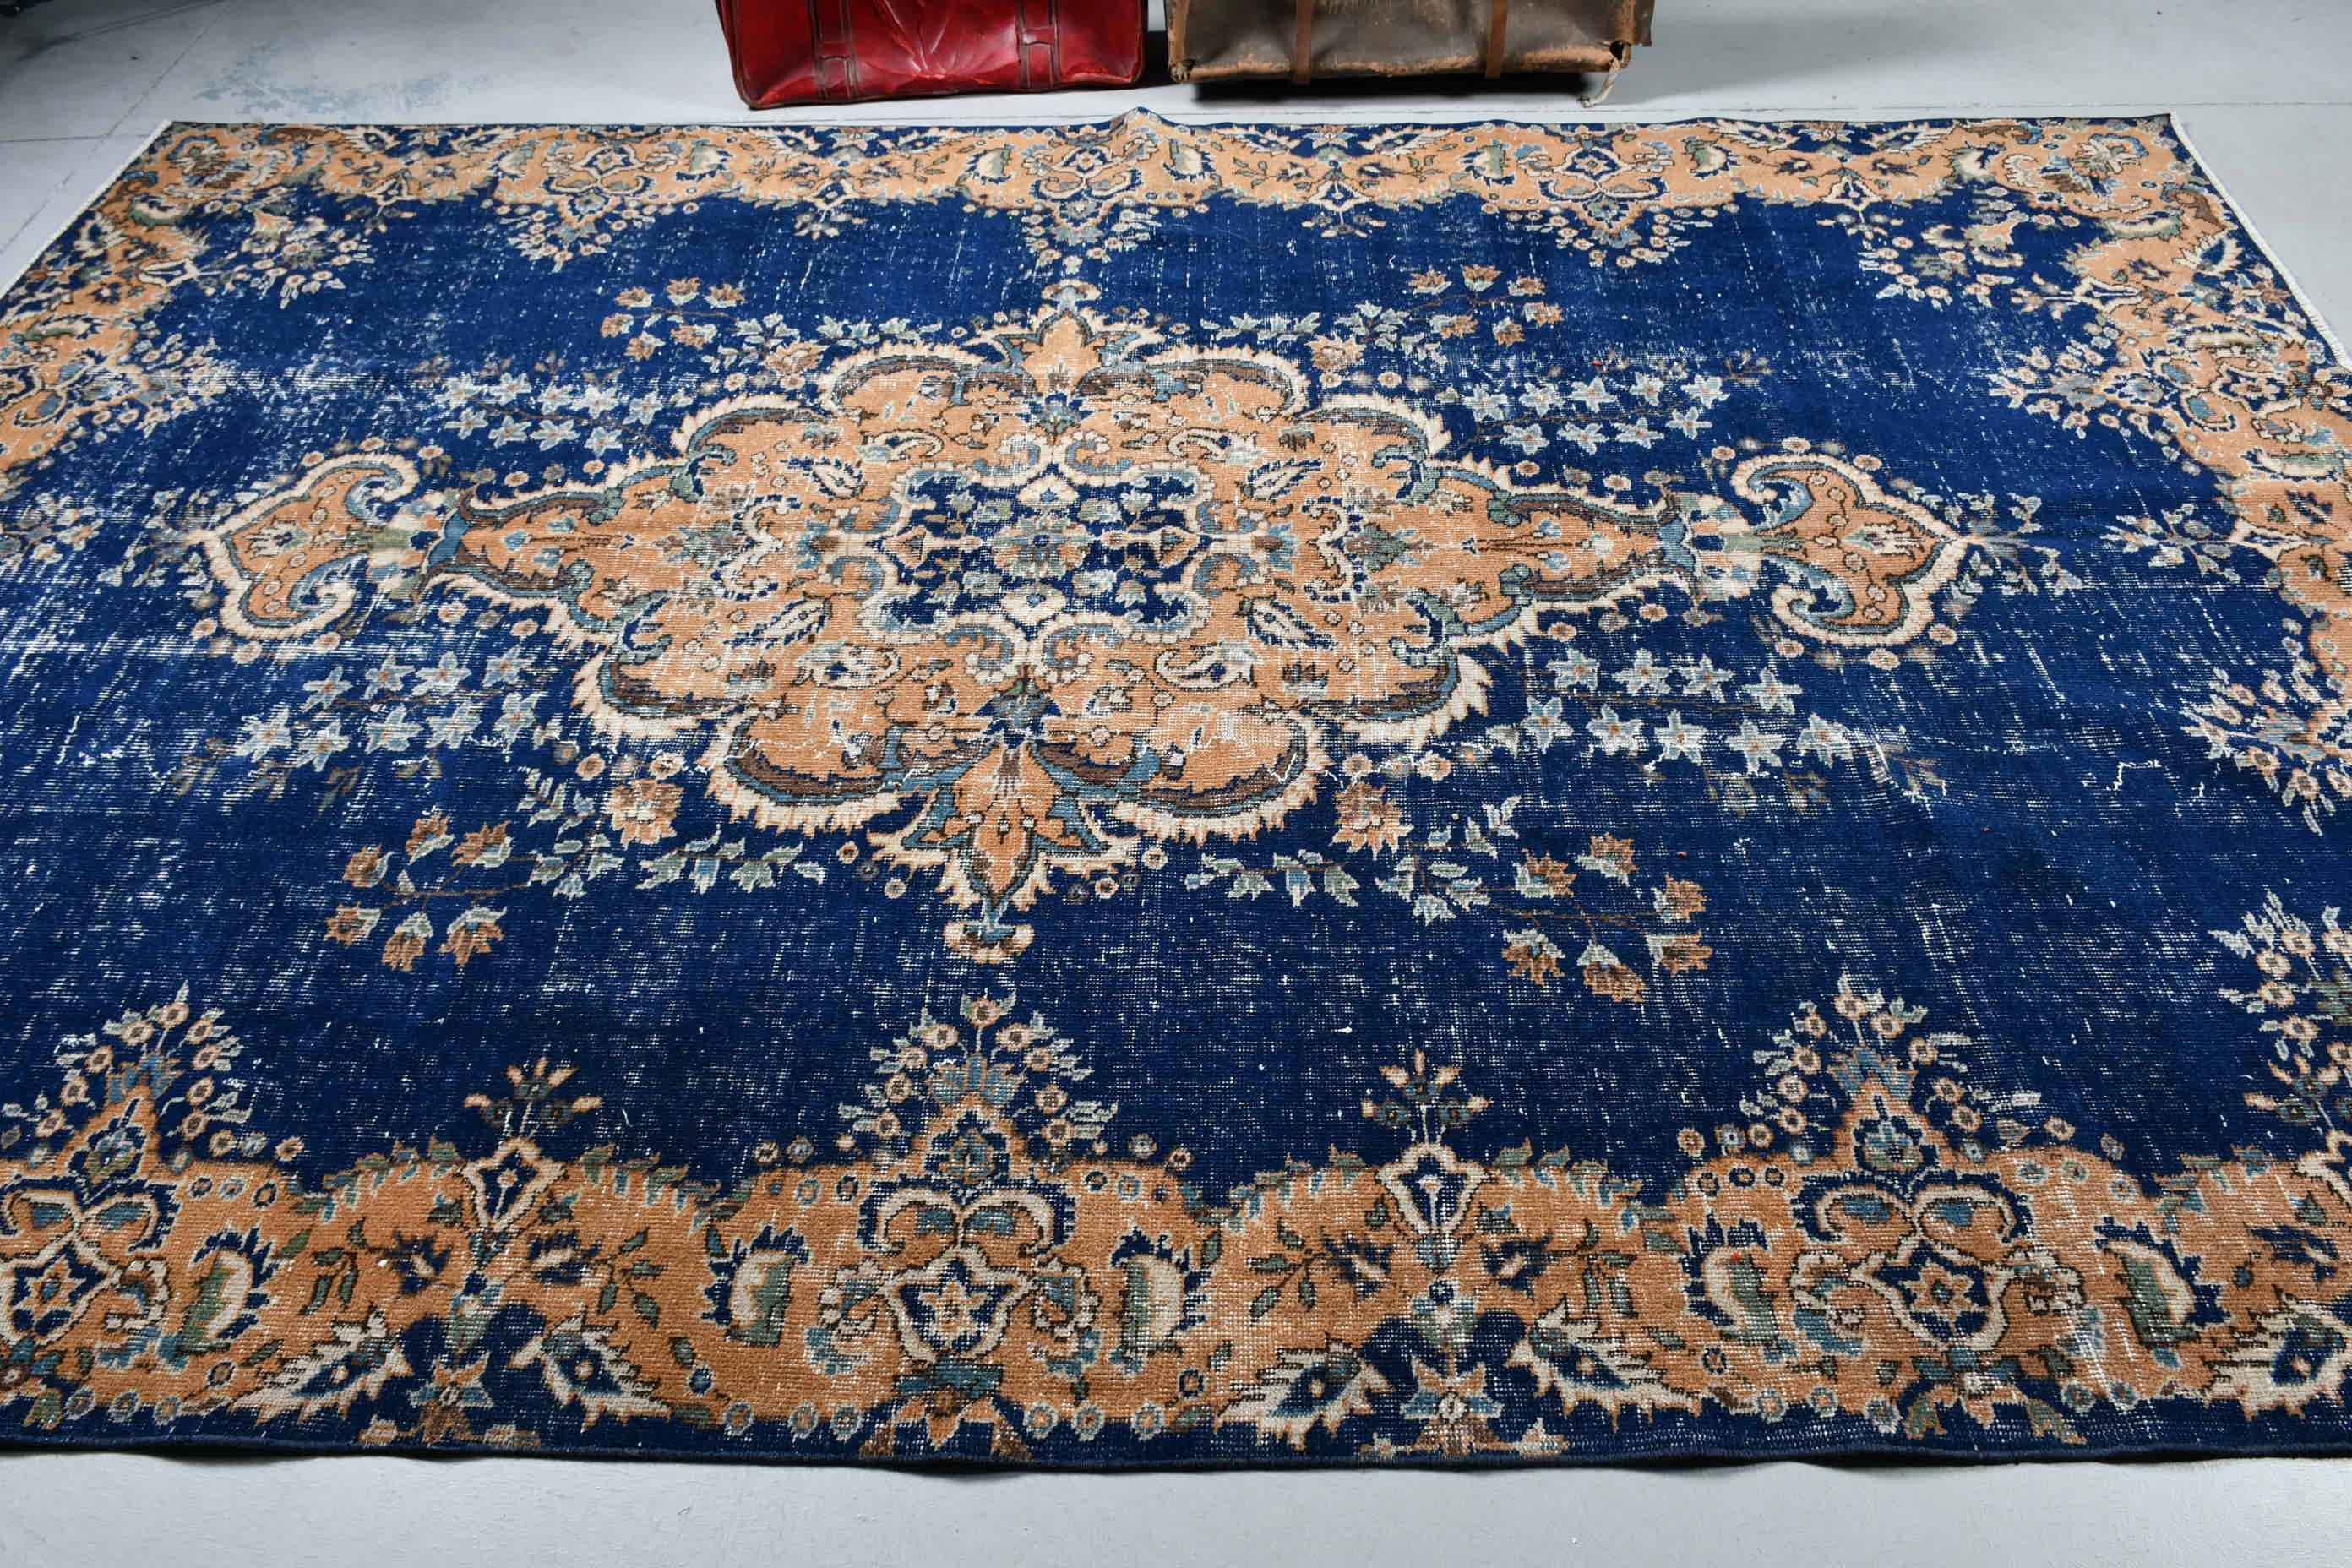 Turkish Rug, Office Rugs, Salon Rug, Anatolian Rug, Bedroom Rug, Blue Oriental Rugs, Moroccan Rugs, Vintage Rug, 6.8x10.2 ft Large Rug